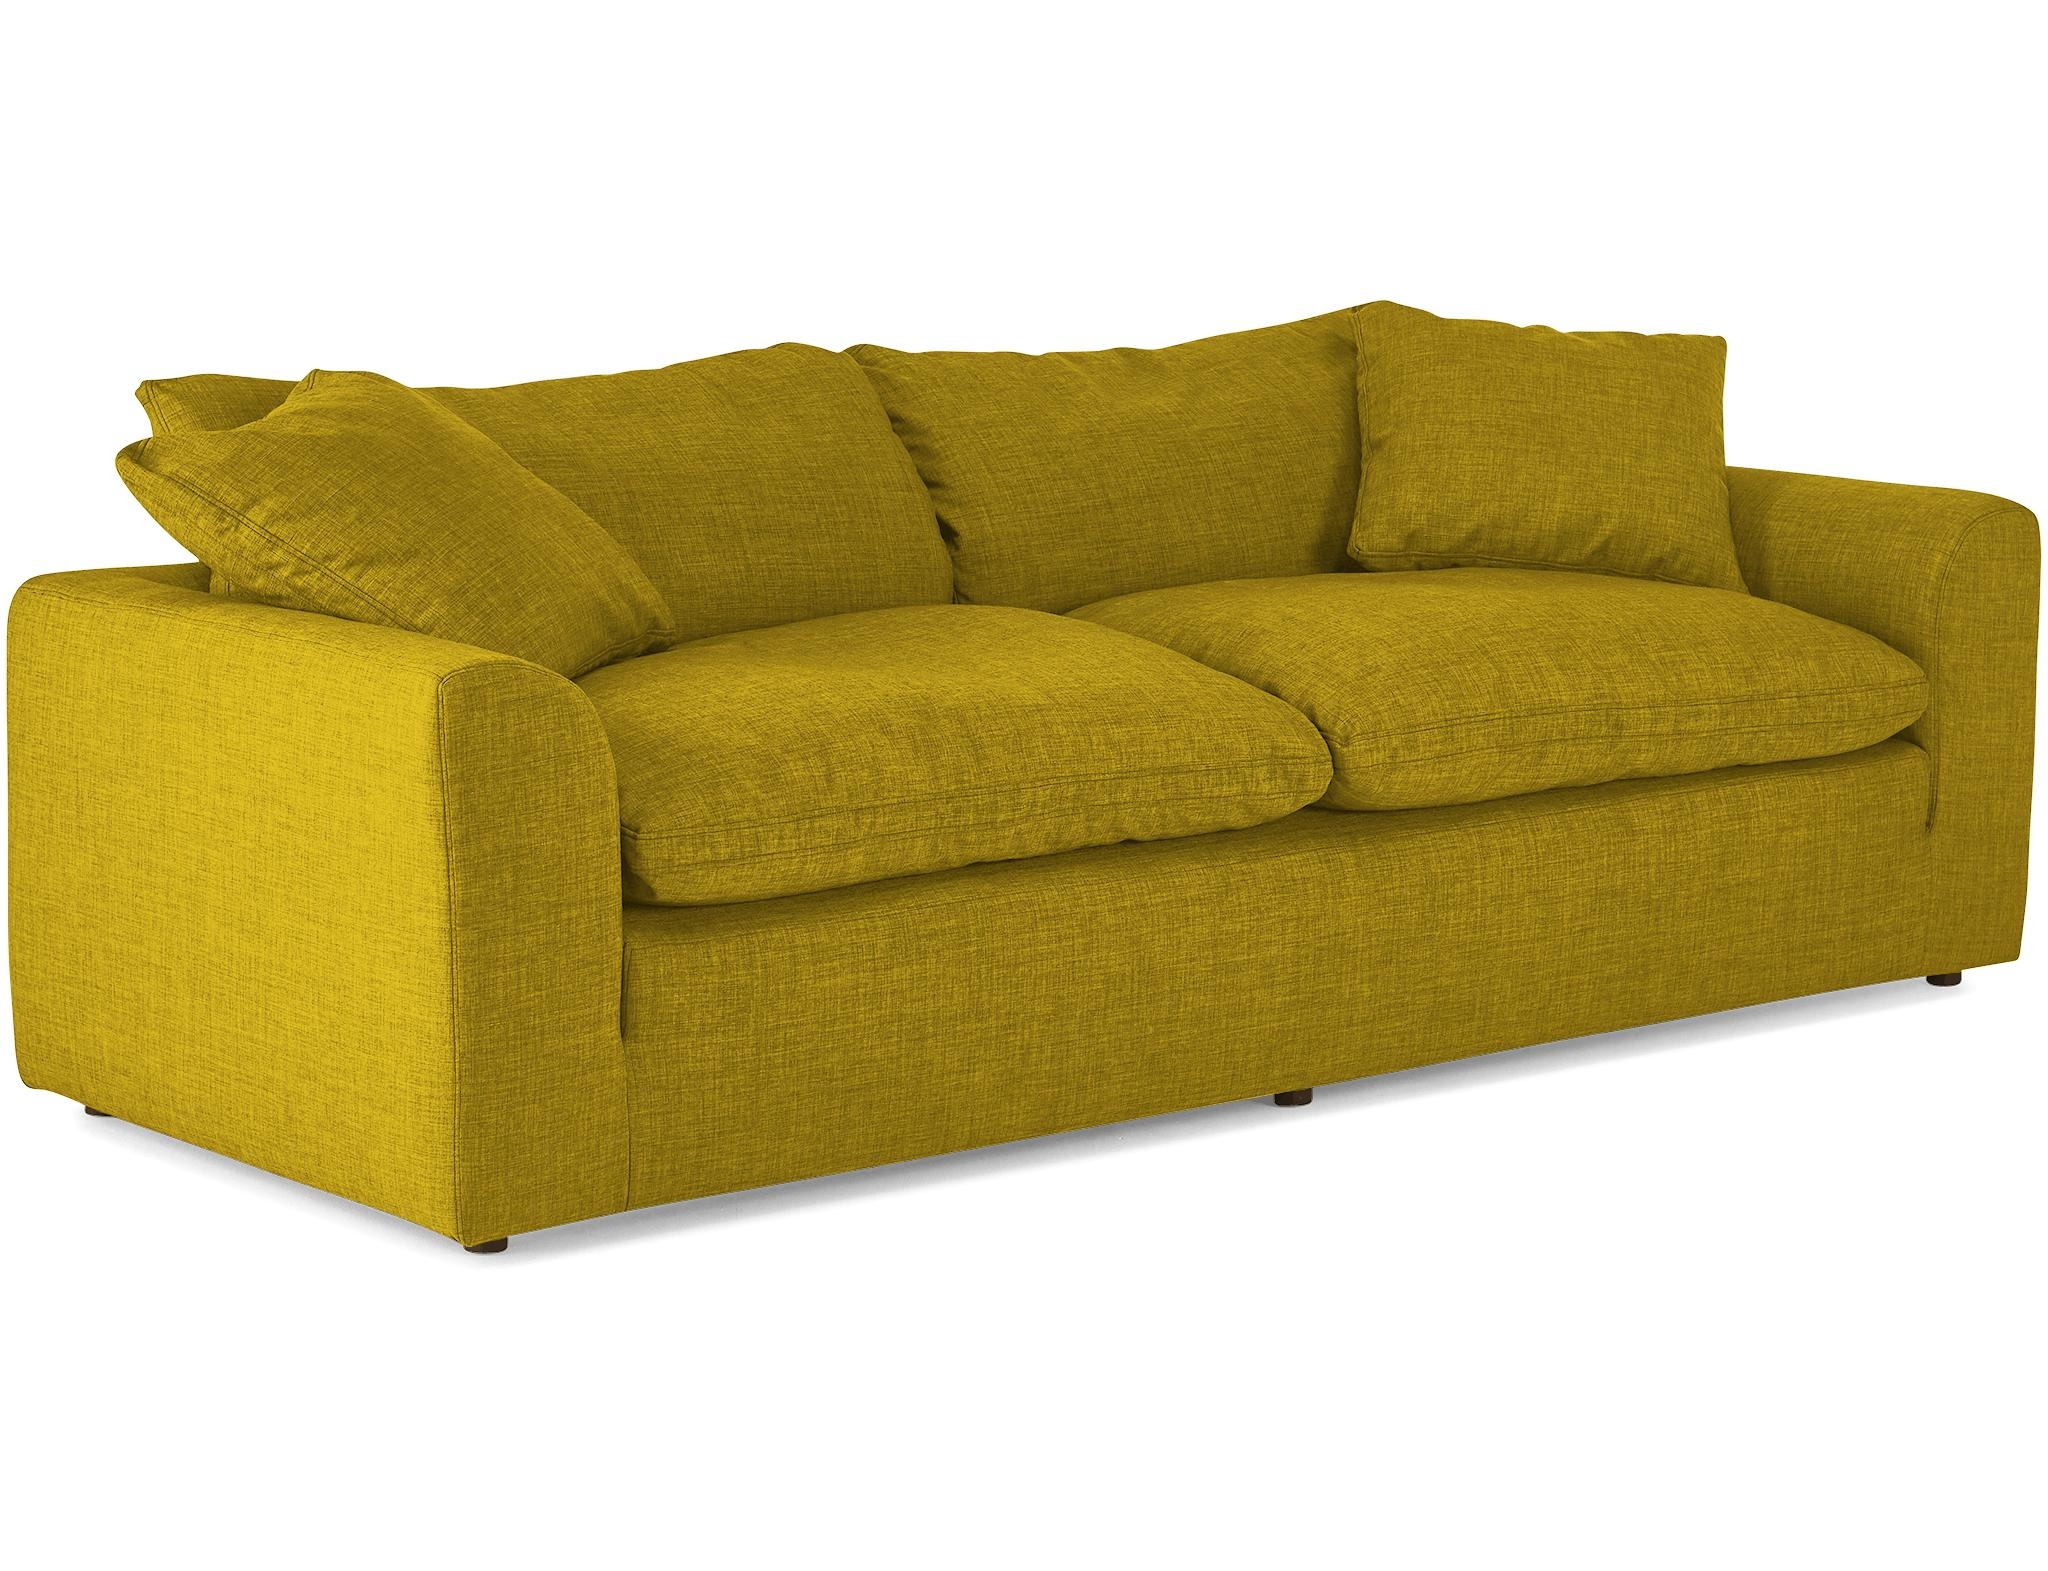 Yellow Bryant Mid Century Modern Sofa - Bloke Goldenrod - Image 1